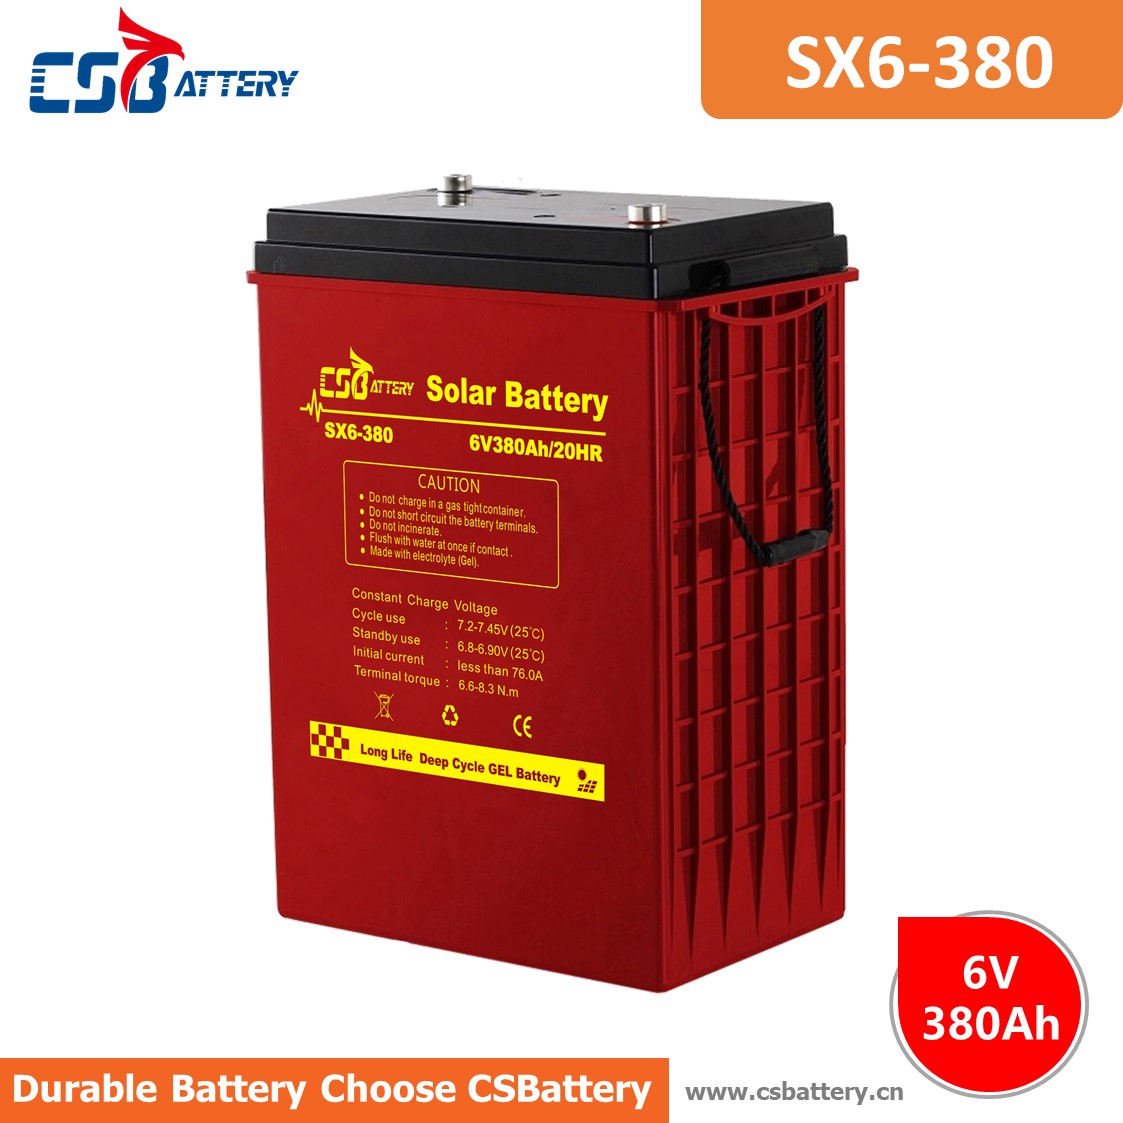 SX6-380 6V 380Ah Deep Cycle GEL-Batterie
